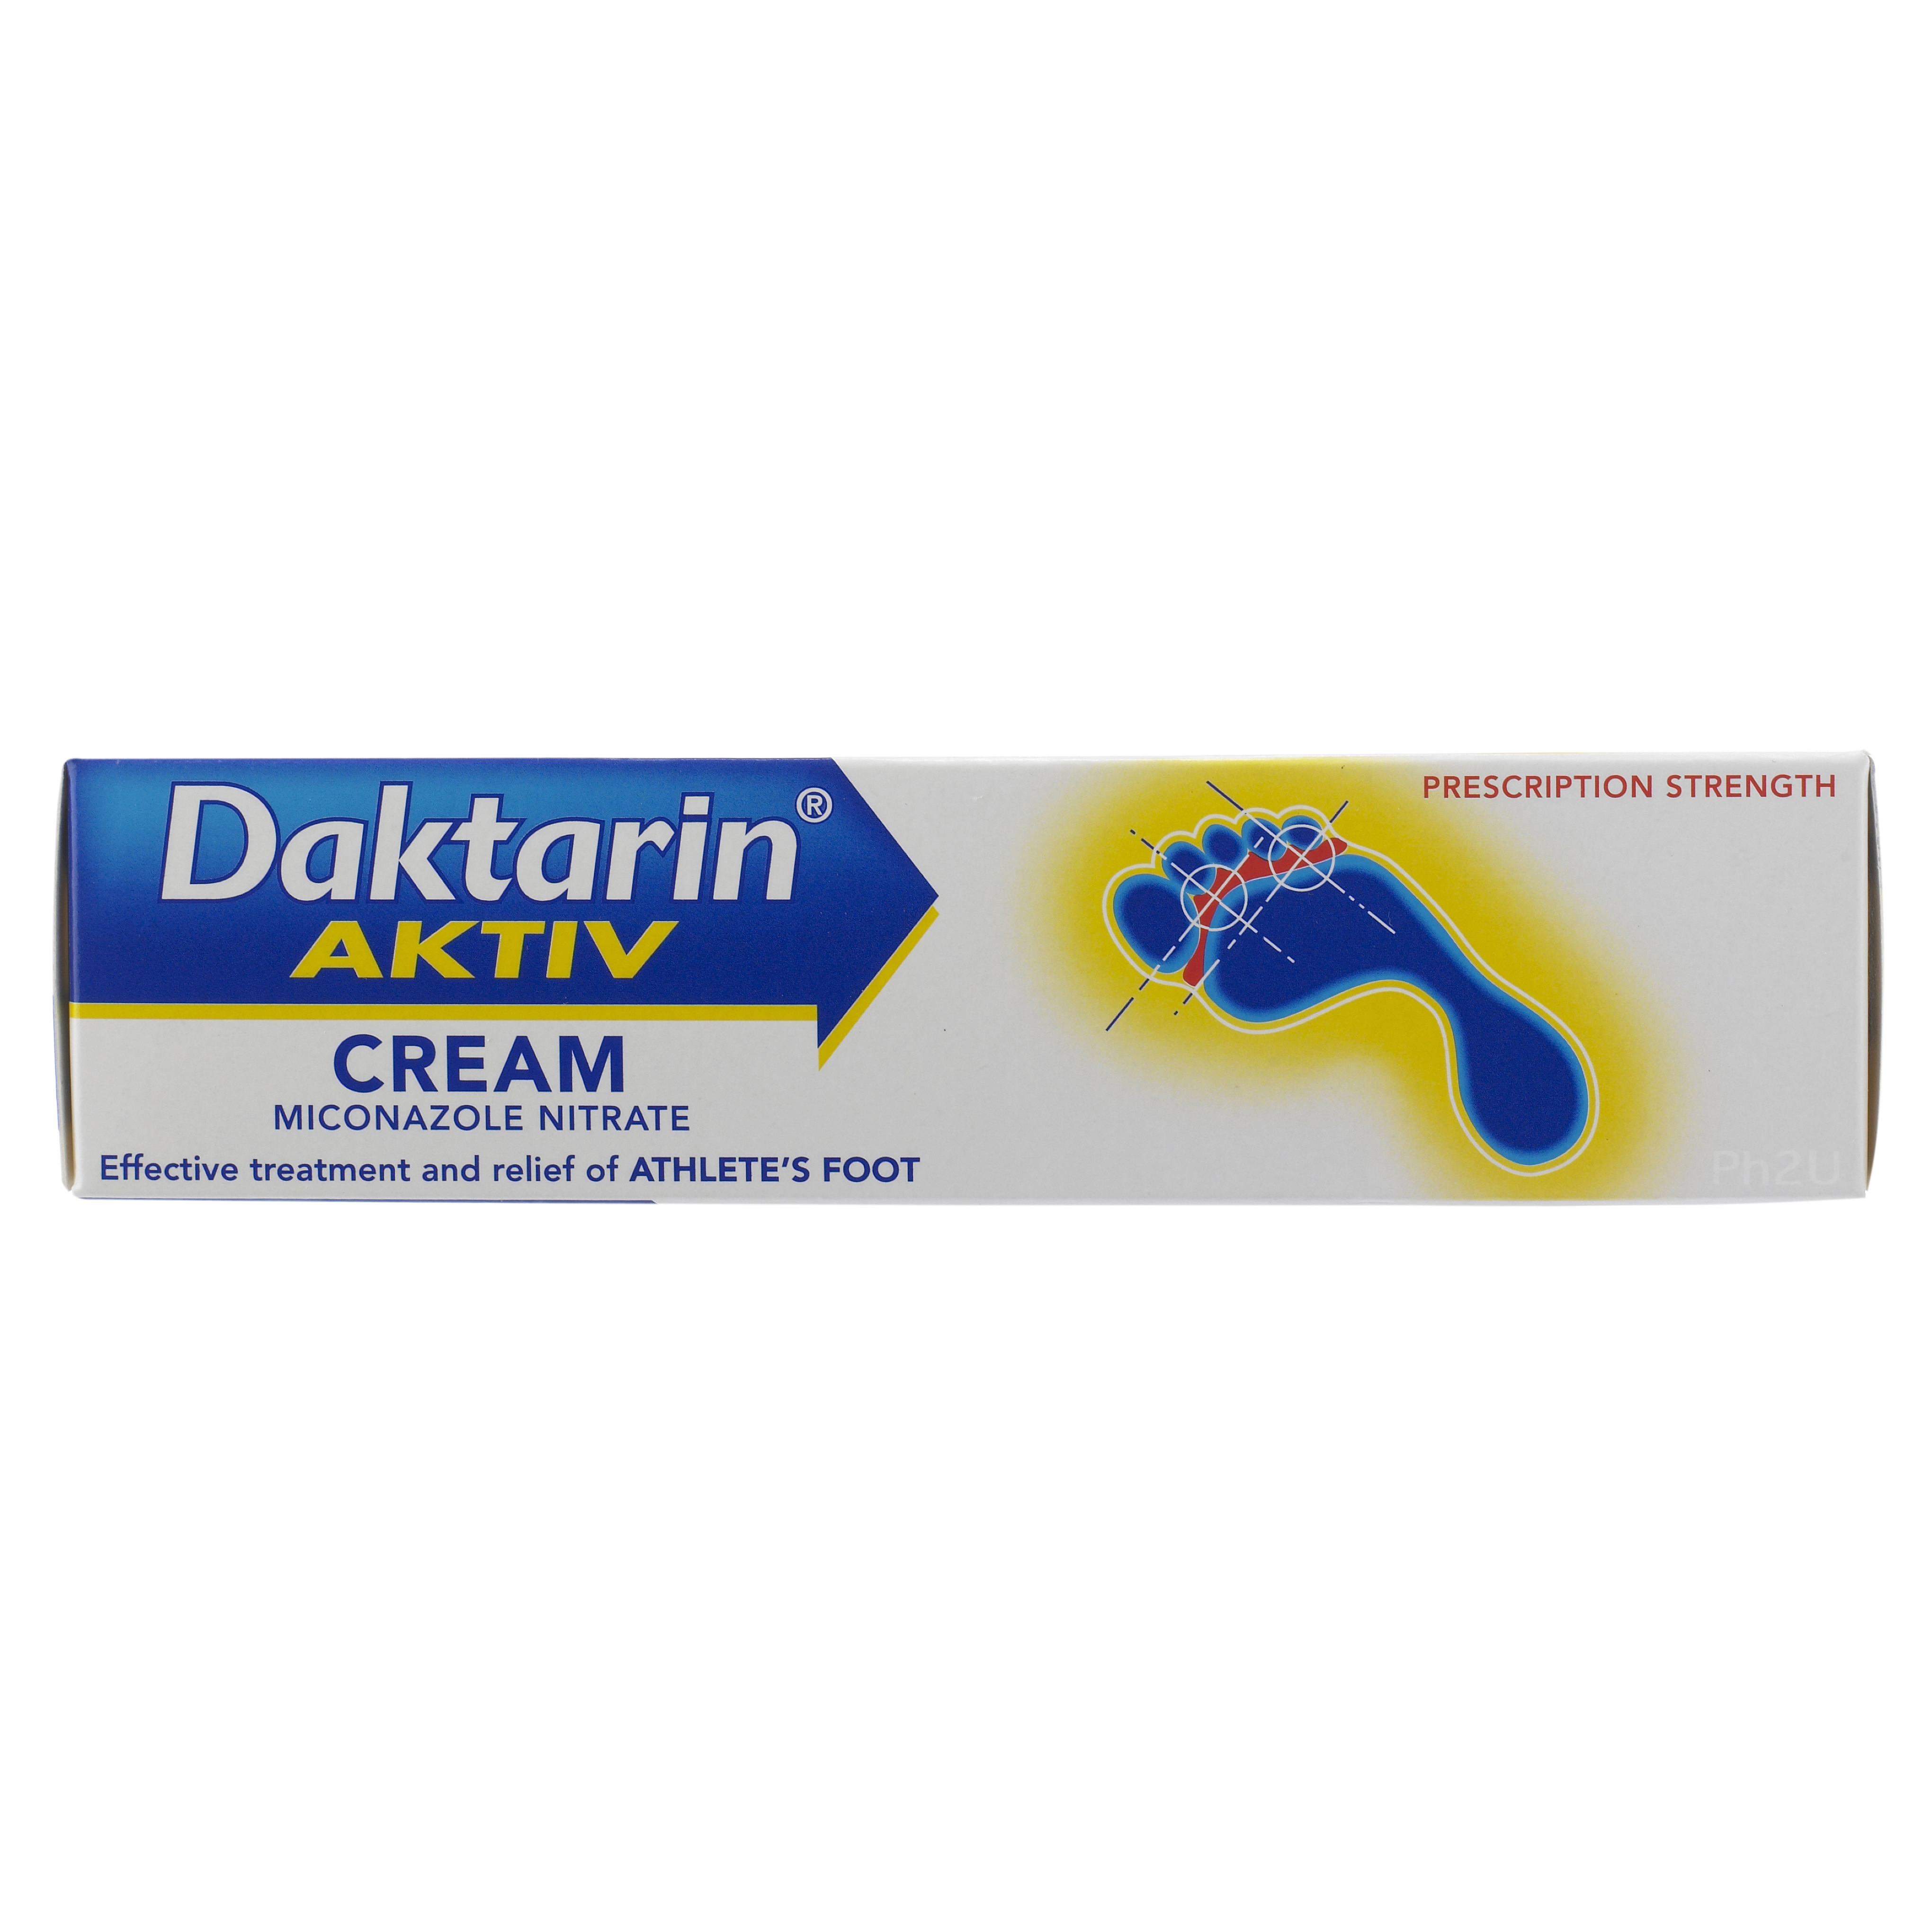 Unbranded Daktarin Dual Action Cream